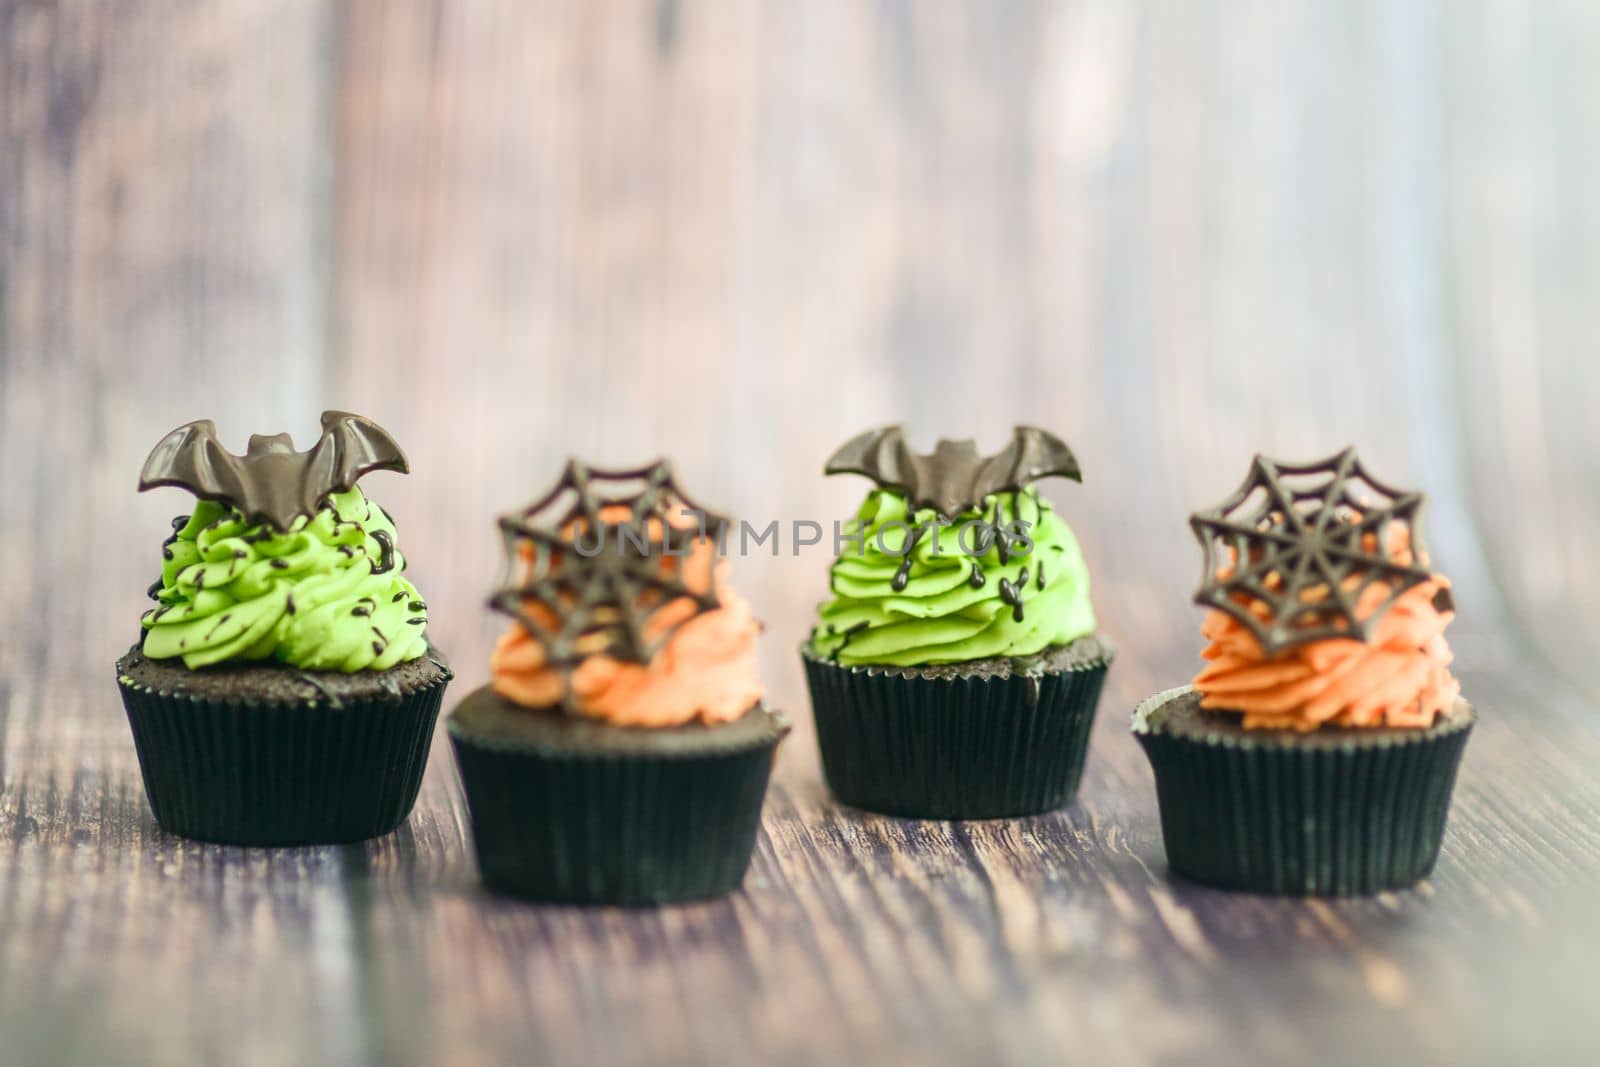 pastry chef baker preparing halloween green orange monster cupcakes handmade by verbano